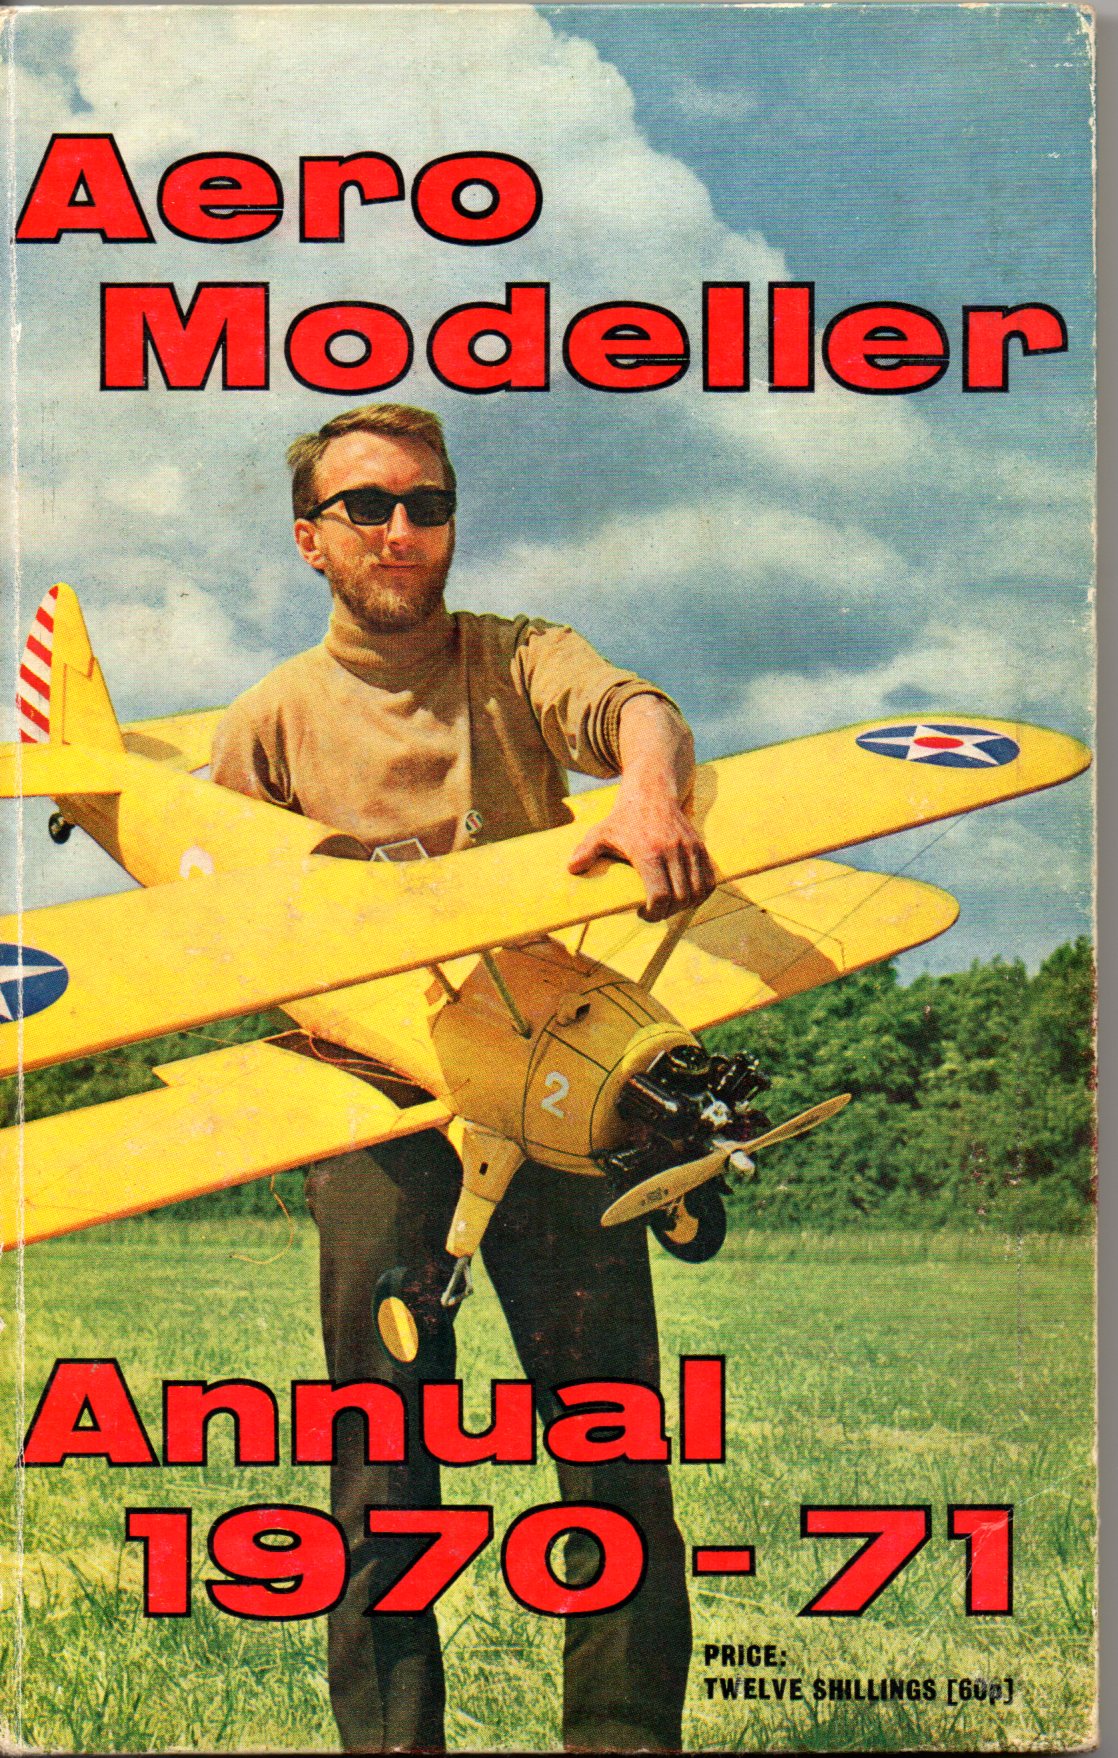 Aeromodeller Annual 1970-71 by DJ Laidlaw-Dickson and R G Moulton